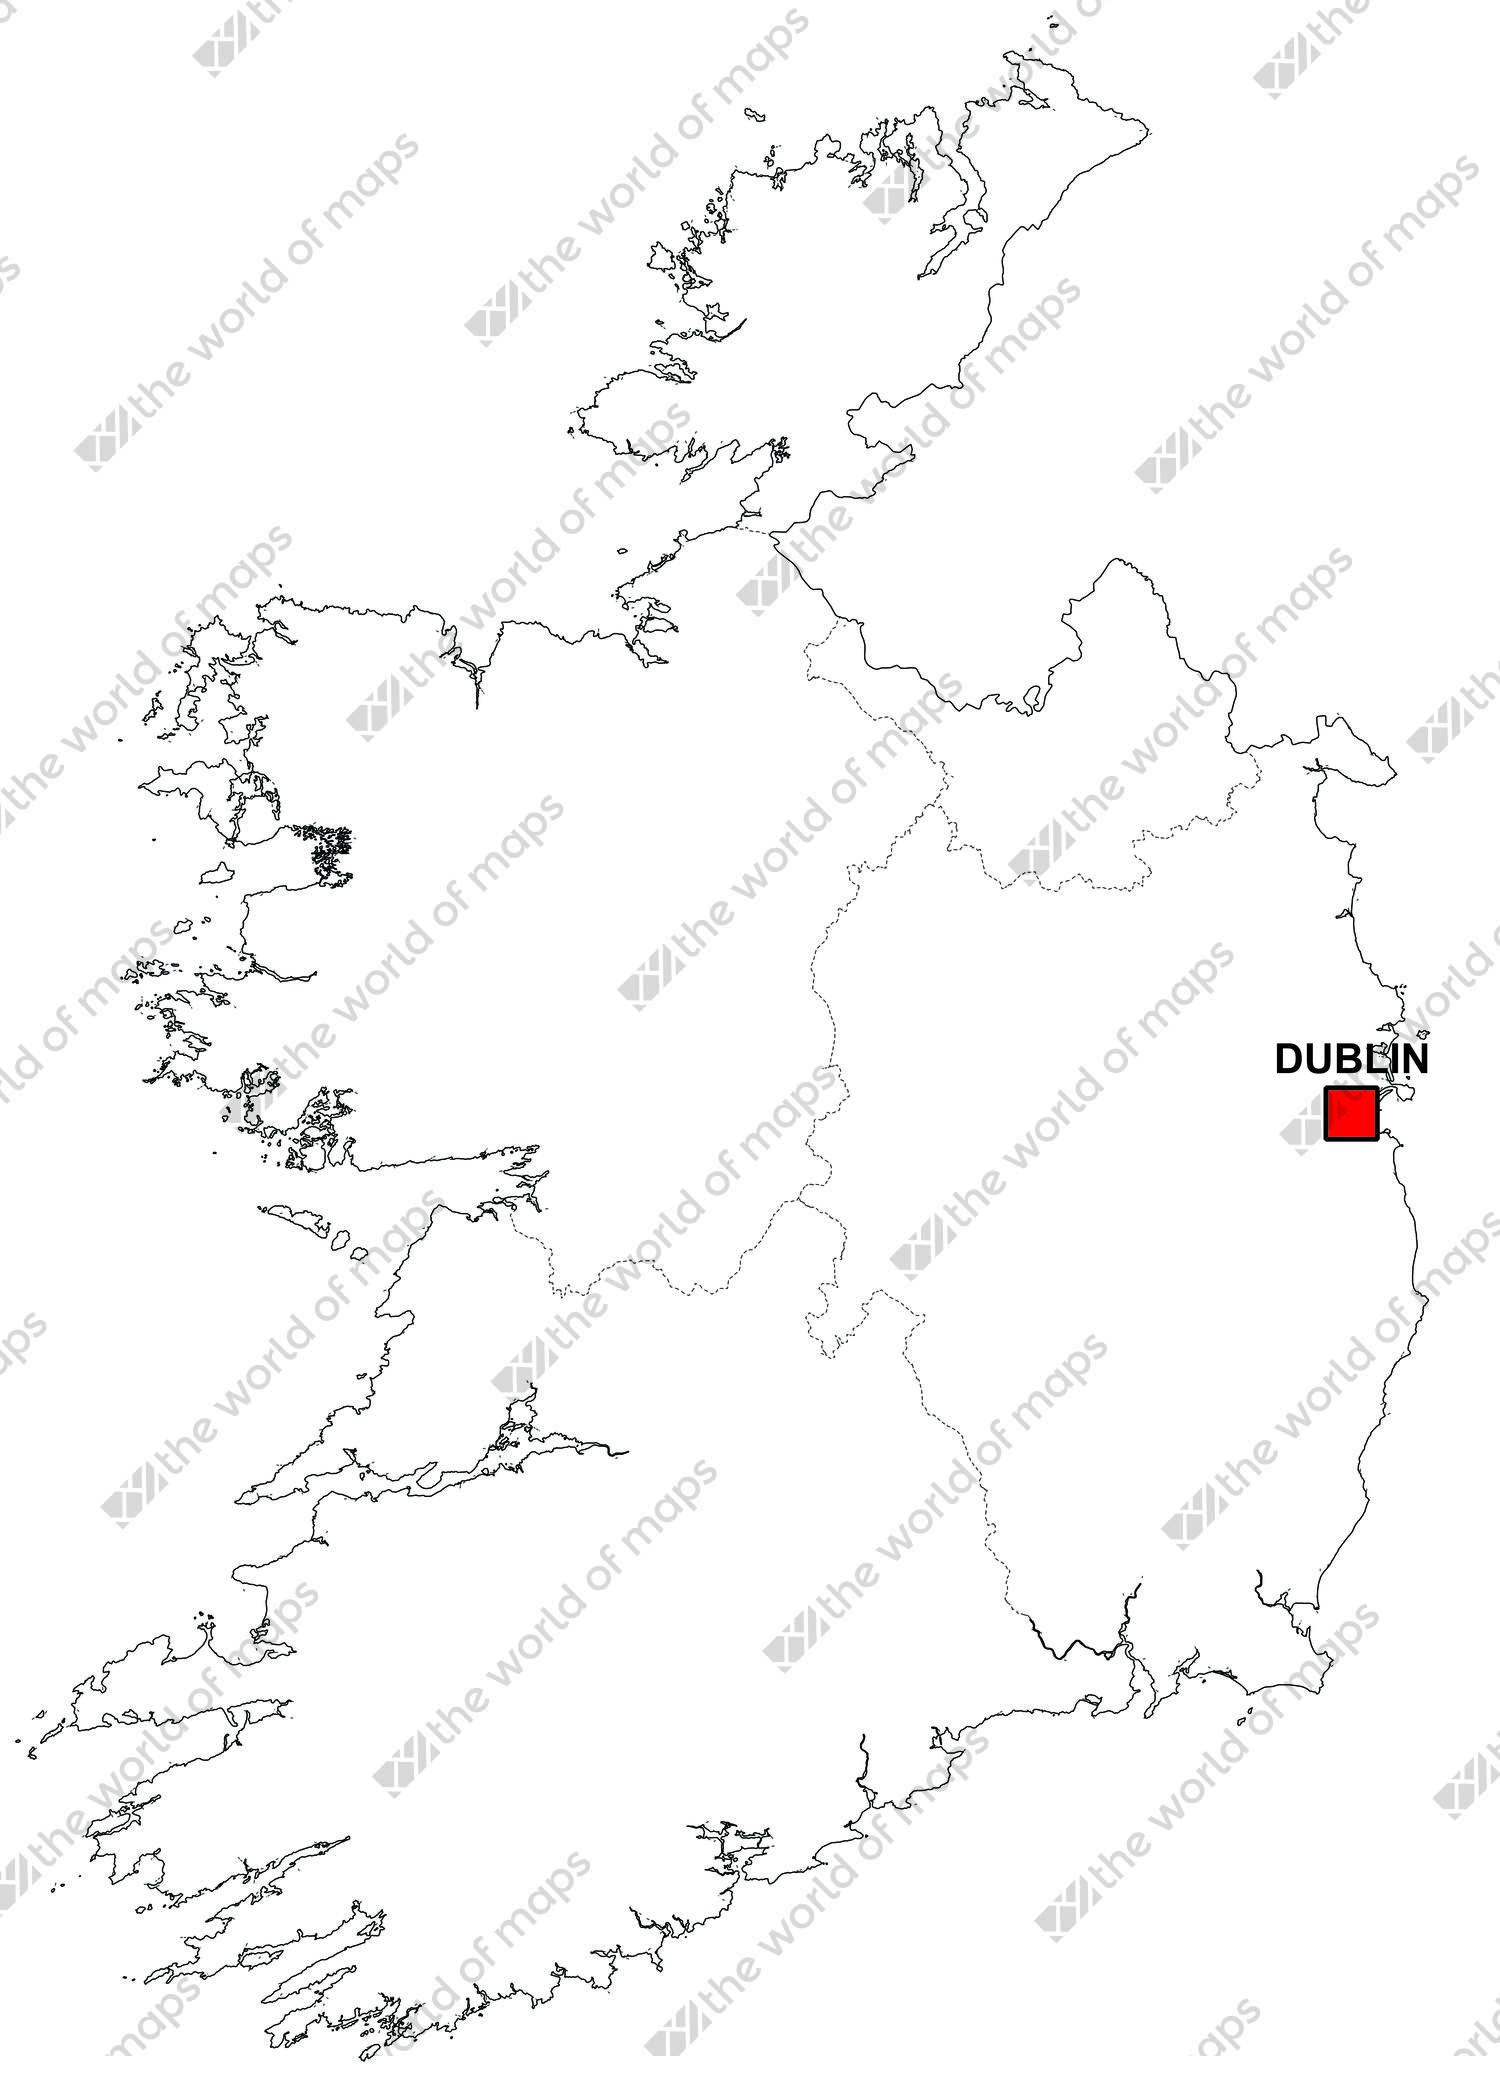 Digital map of Ireland (free)